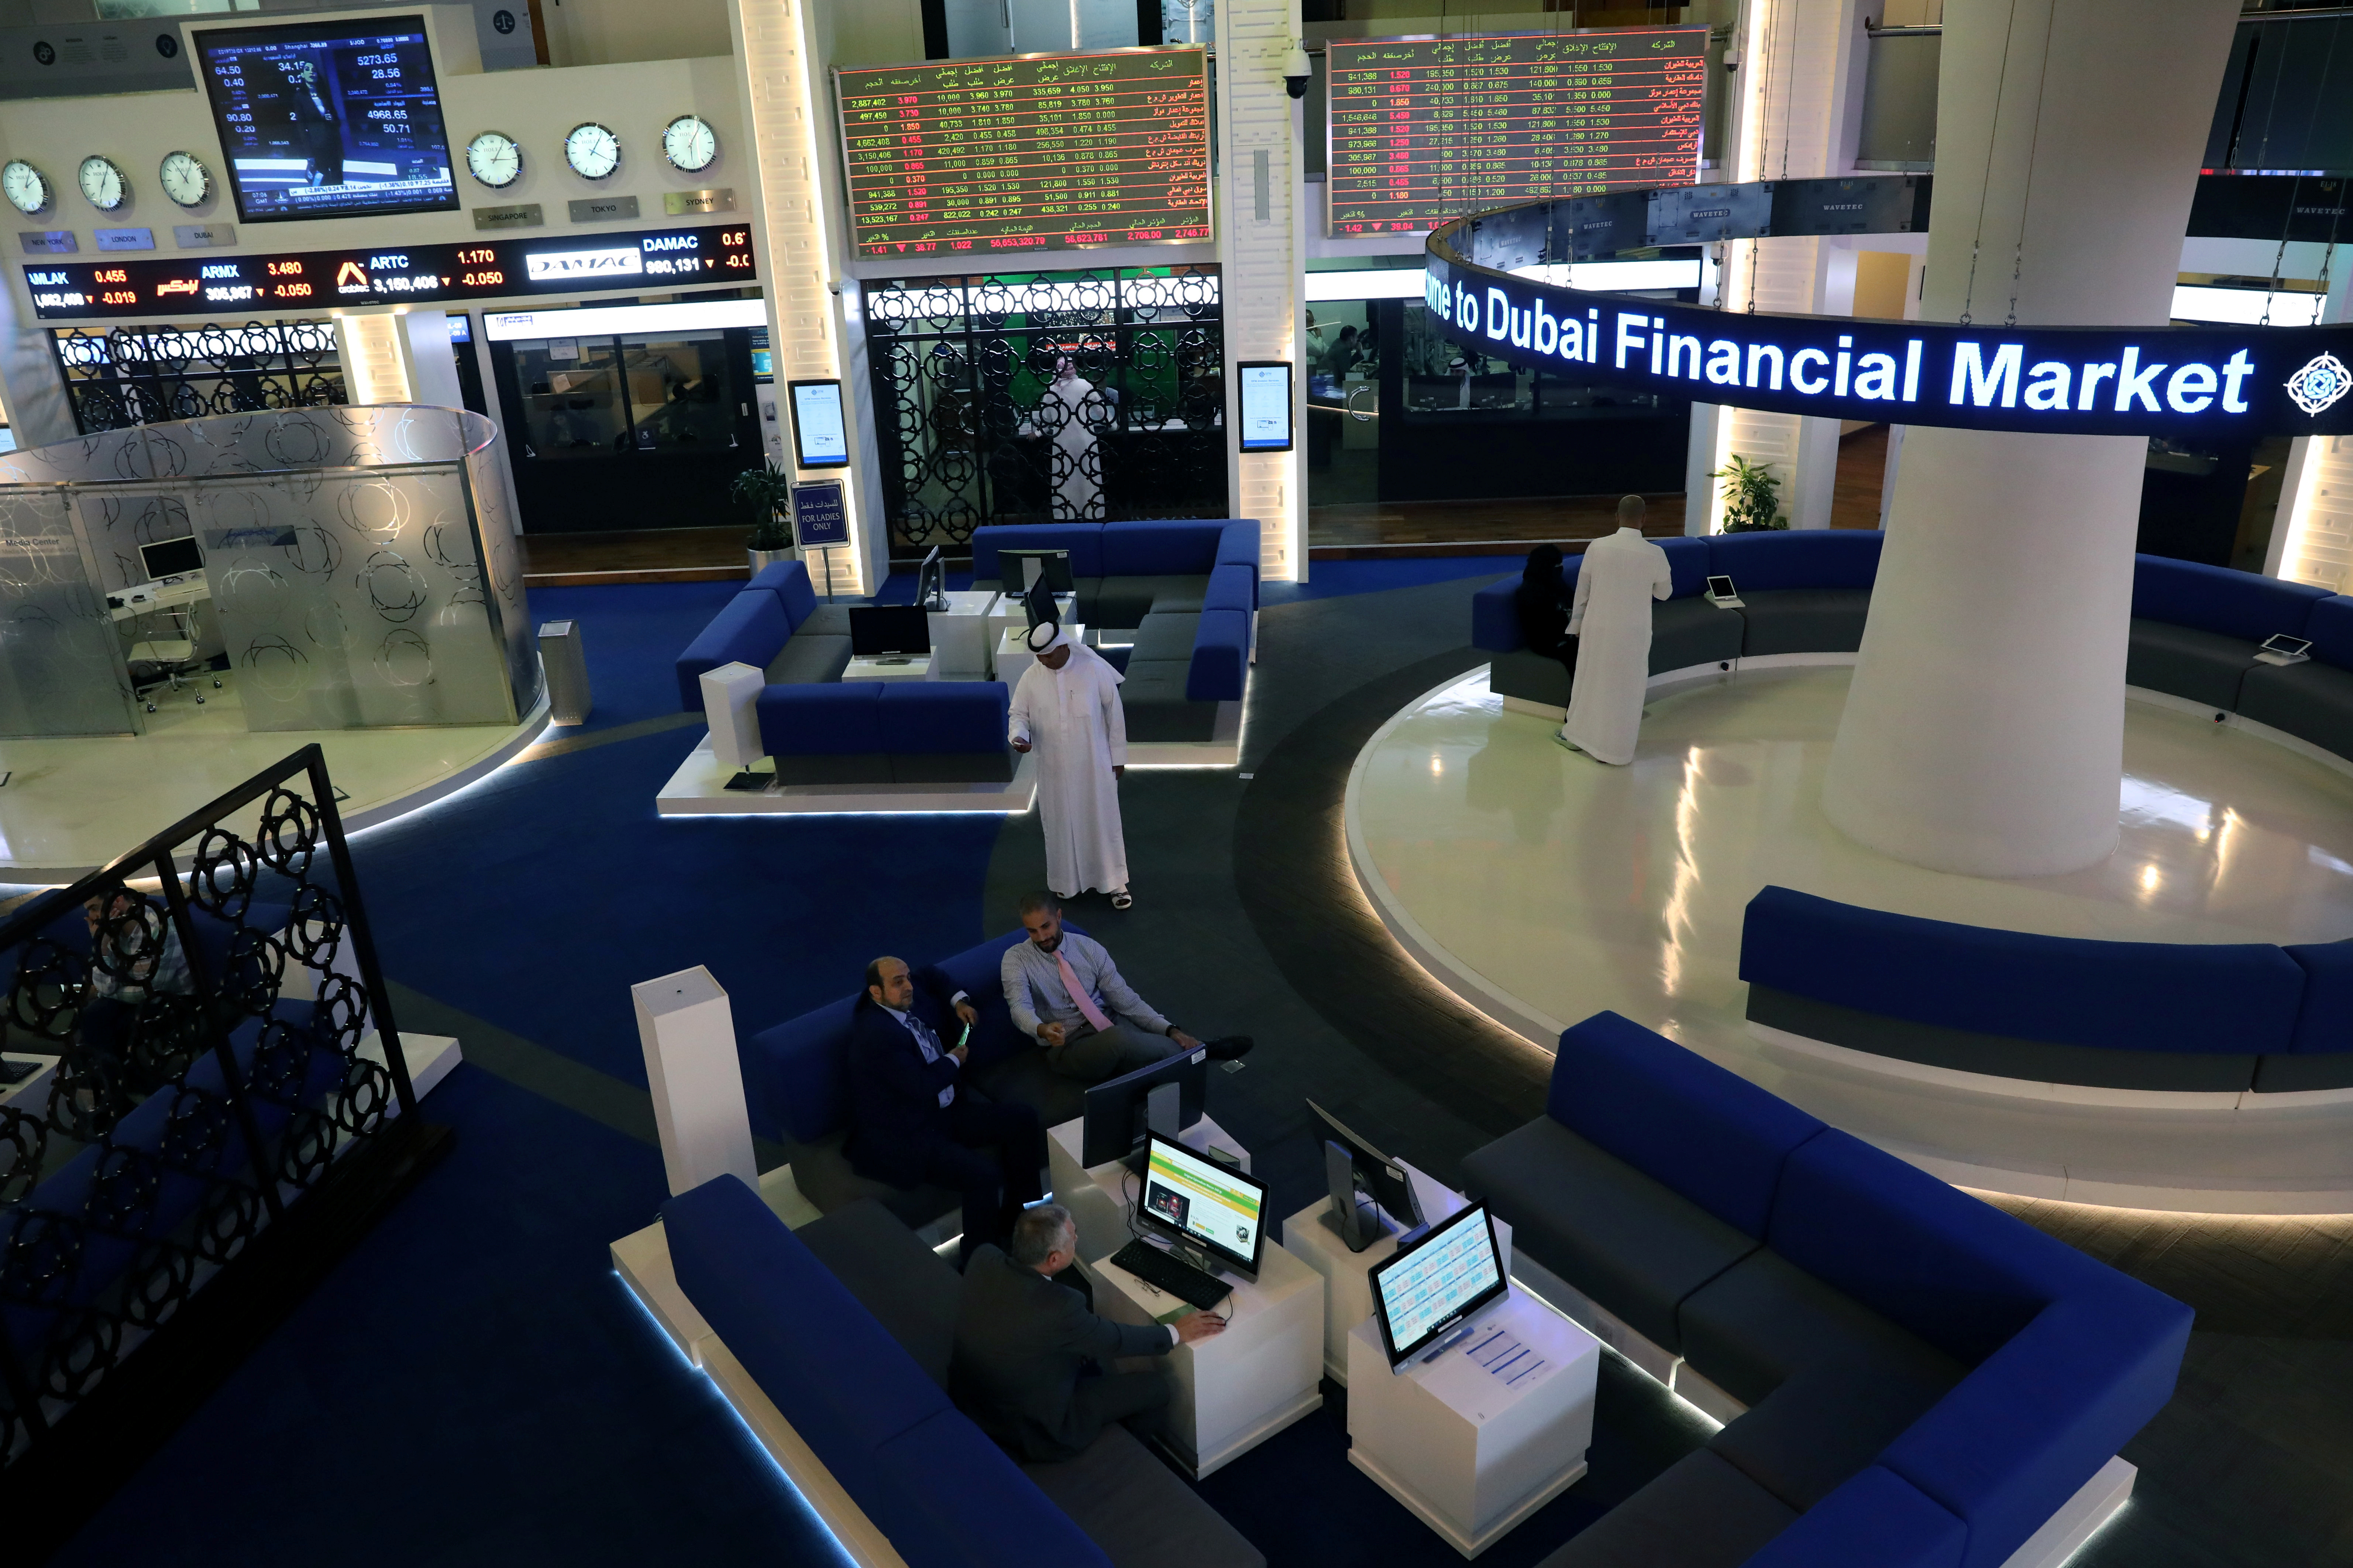 General view of the Dubai Financial Market in Dubai